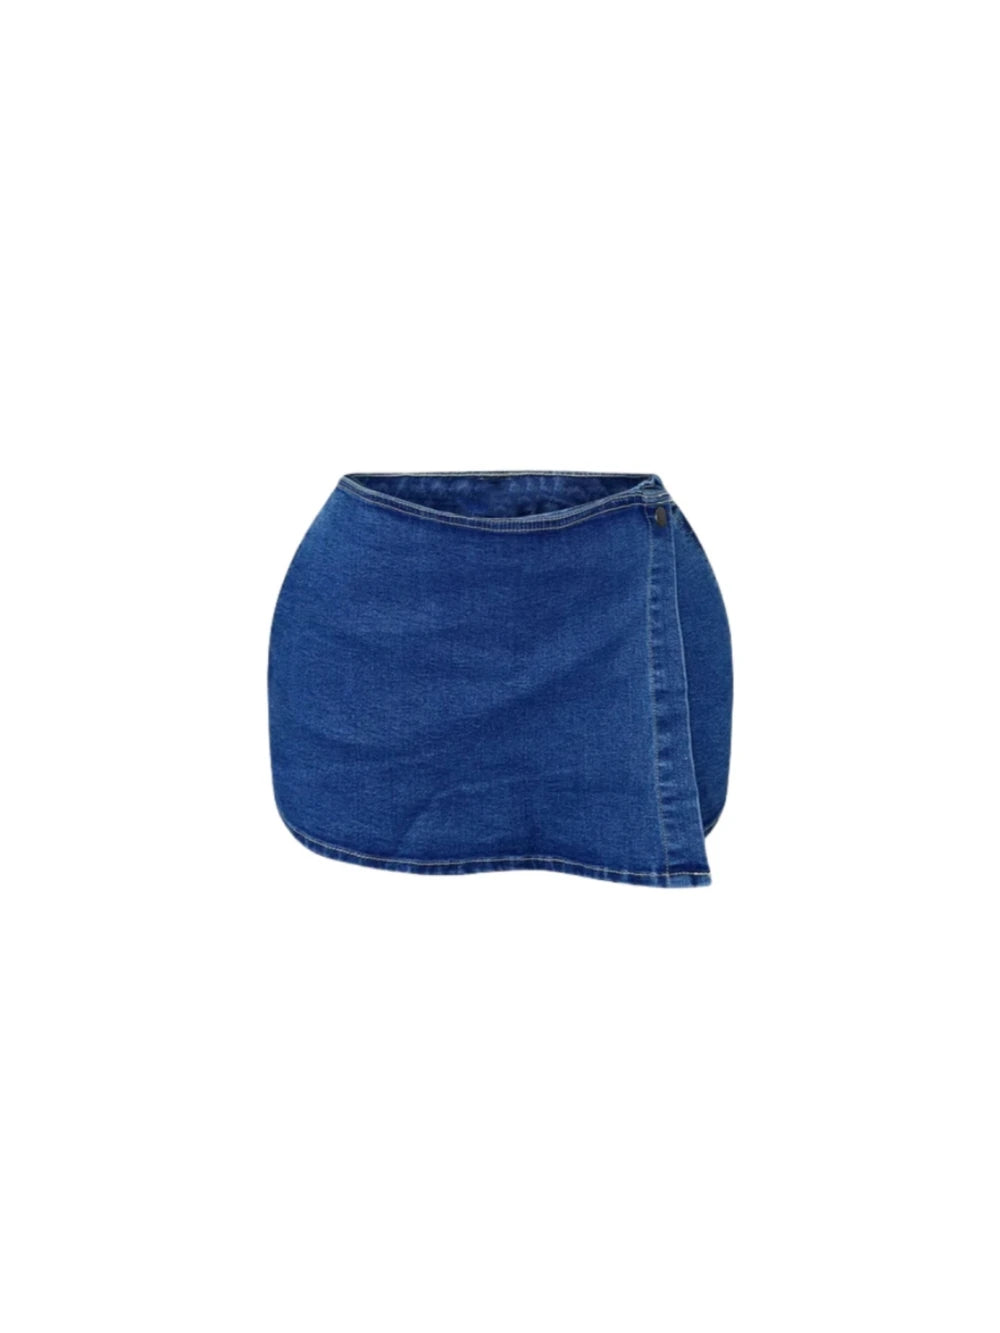 FZ Women's Strapless Slim-Fit Two-Piece Denim Shorts Suit - FZwear